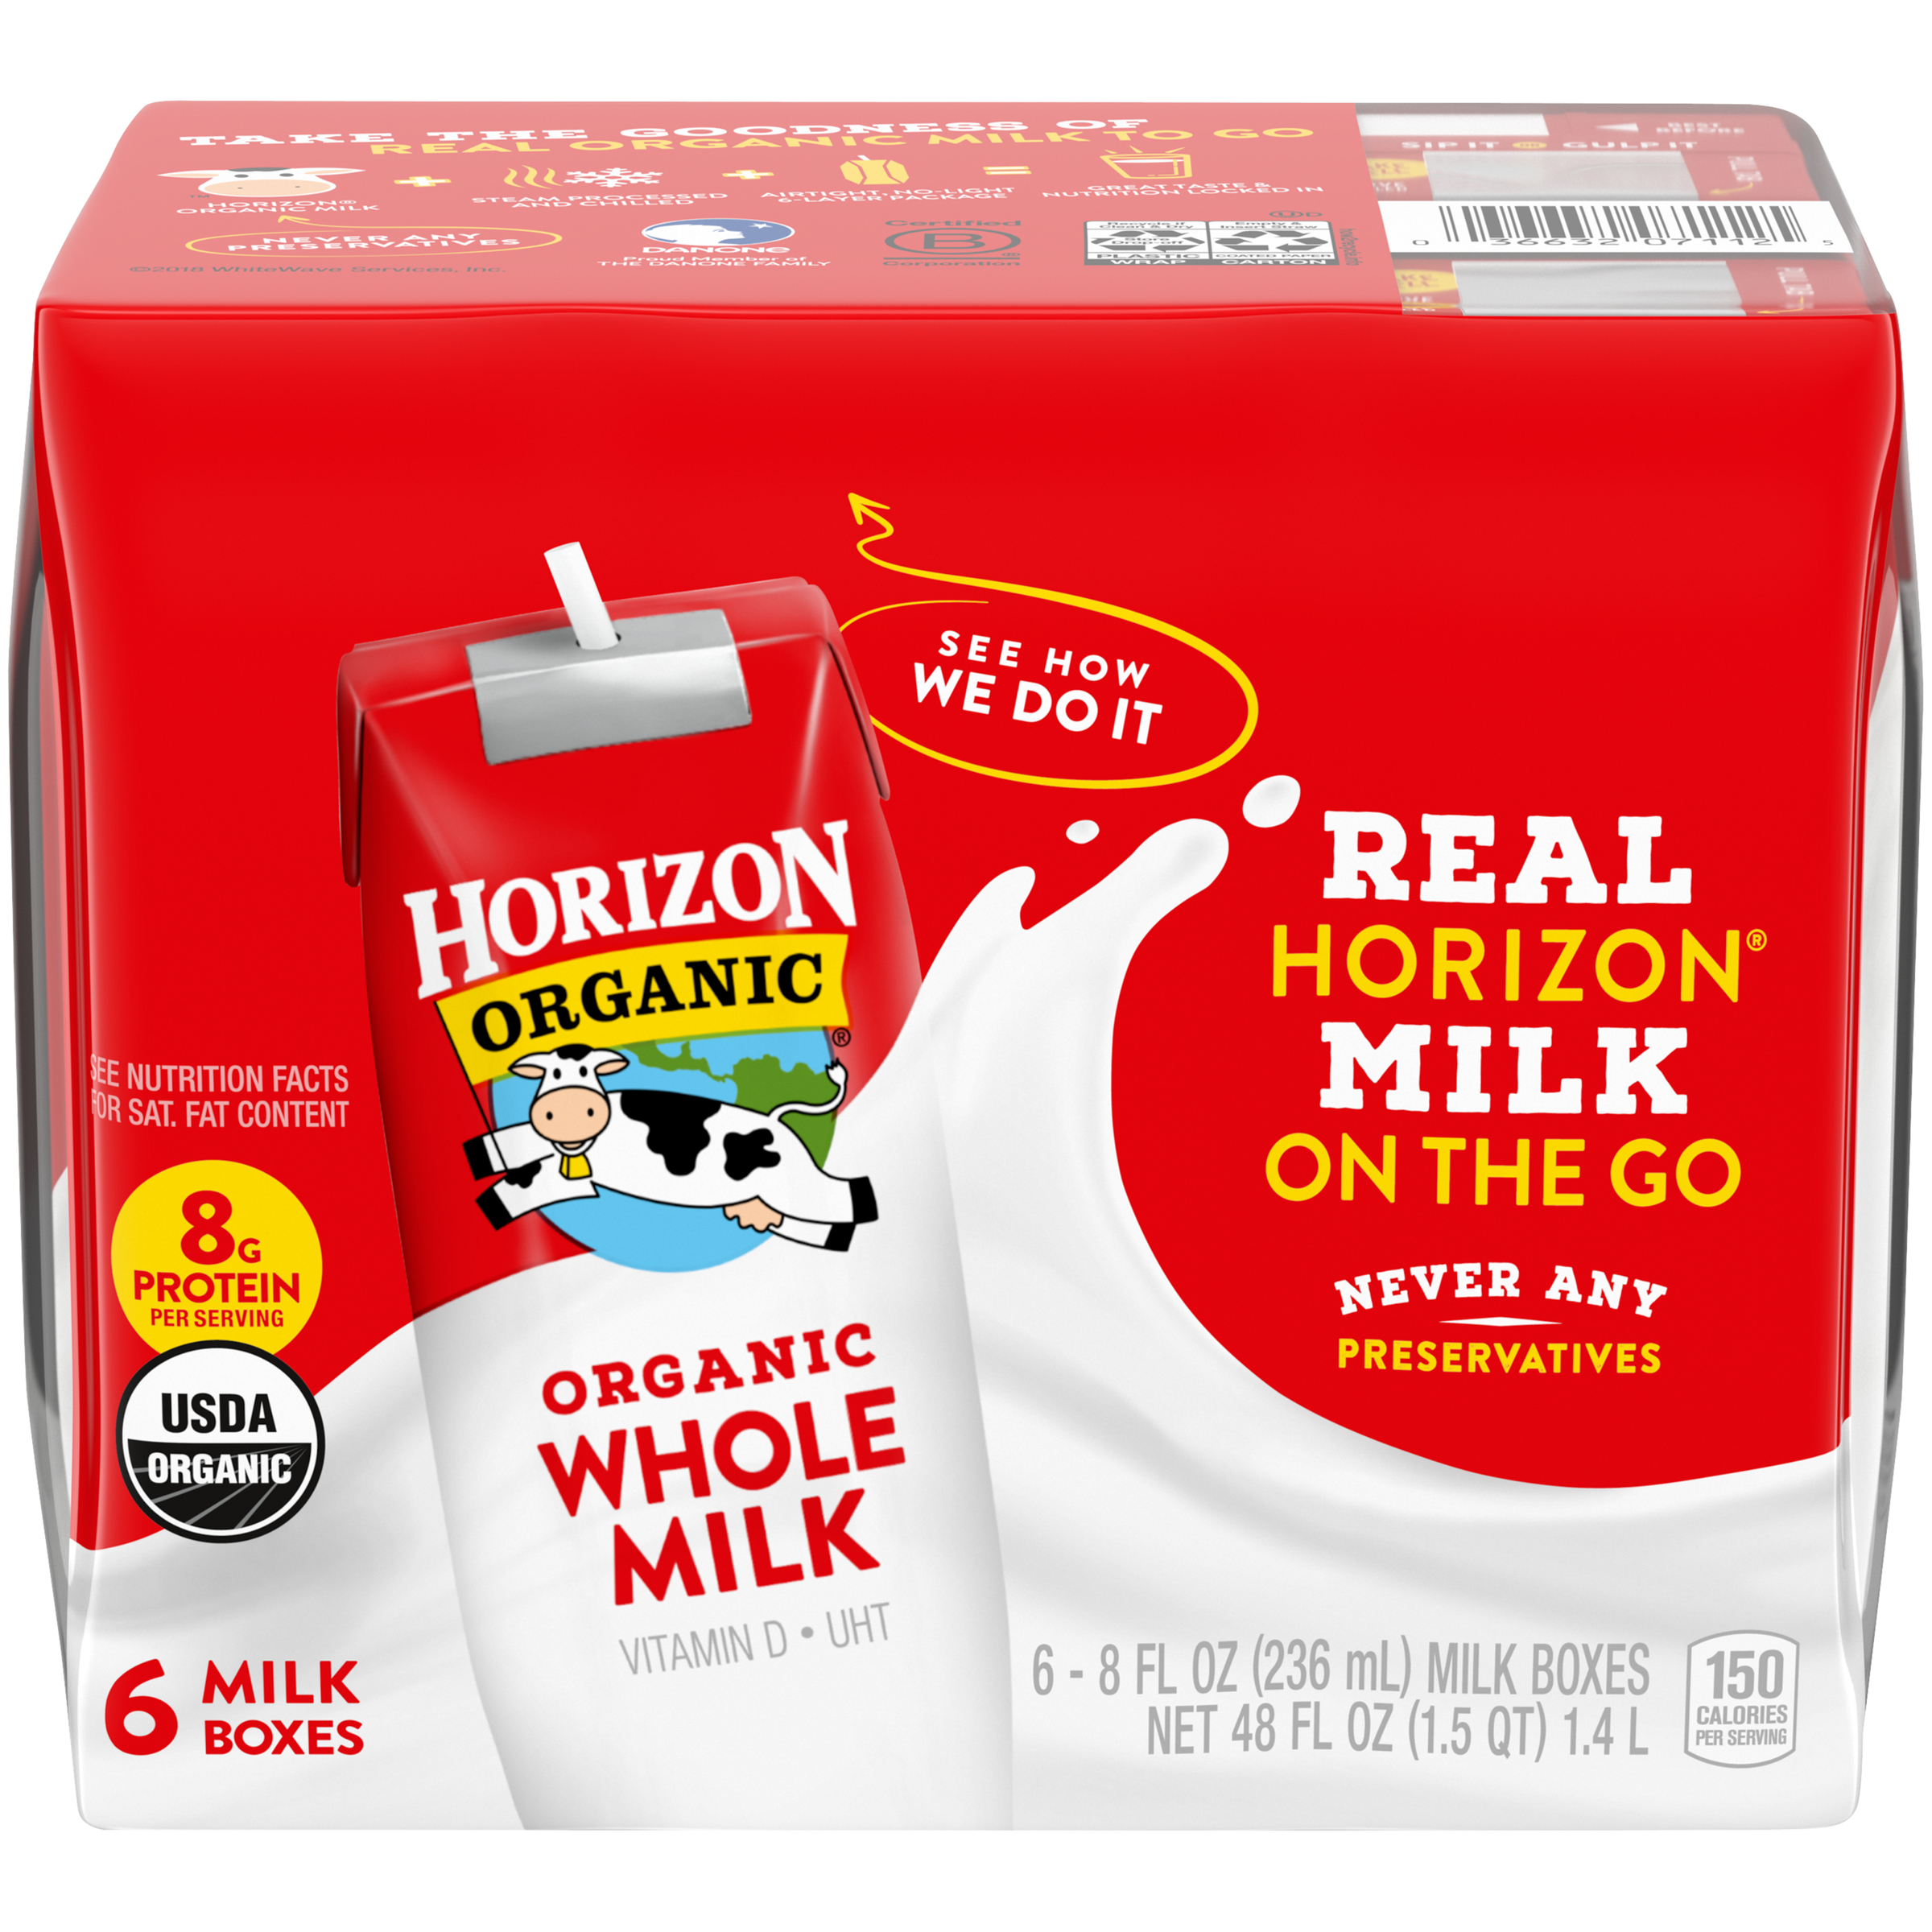 Horizon Organic Whole Milk 3 innerpacks per case 48.0 fl